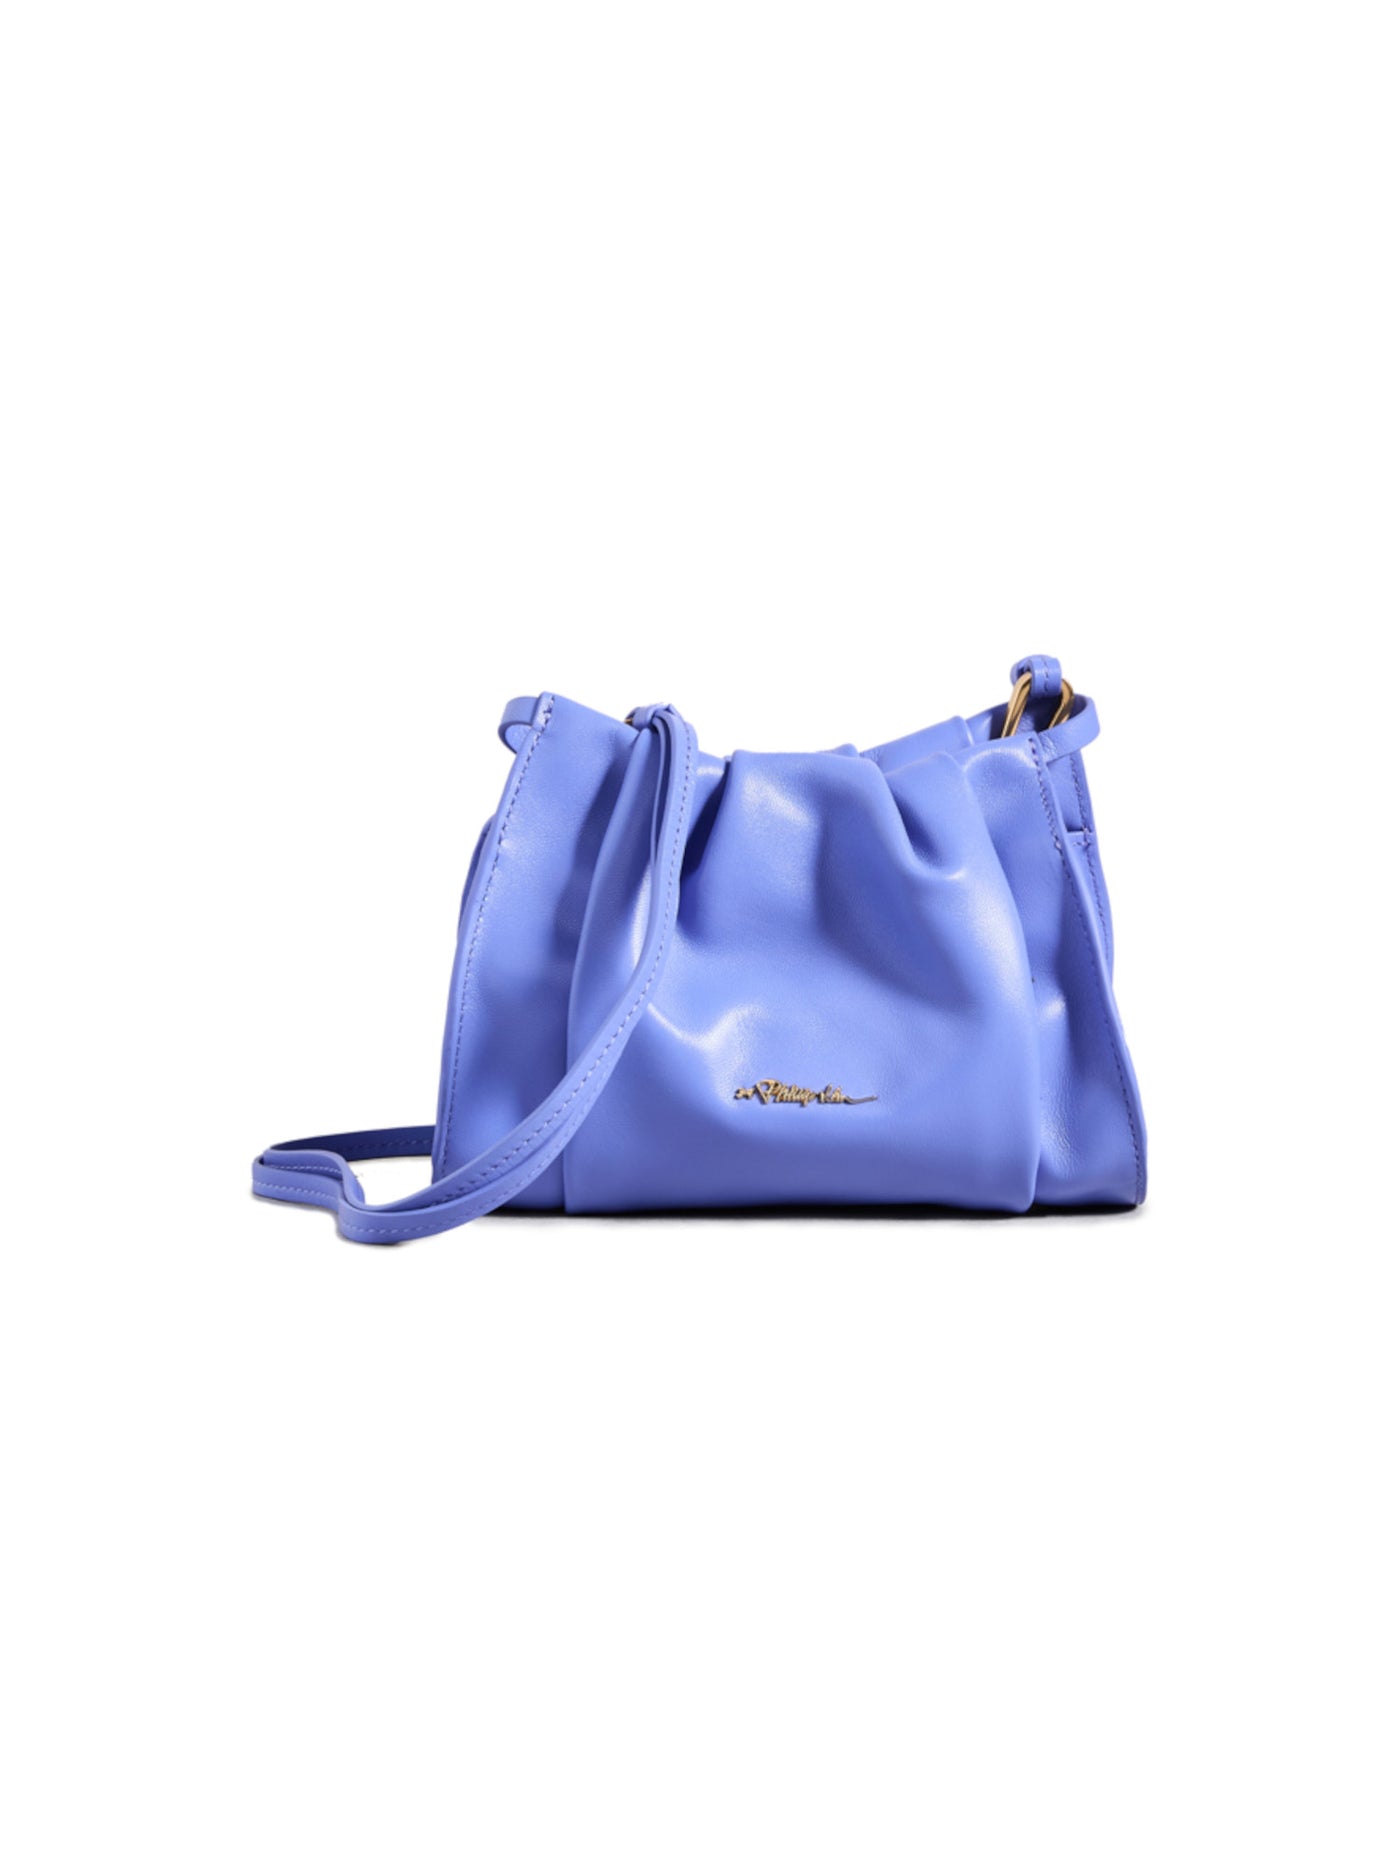 PHILLIP LIN Women's Blue Ruched Solid Single Strap Crossbody Handbag Purse